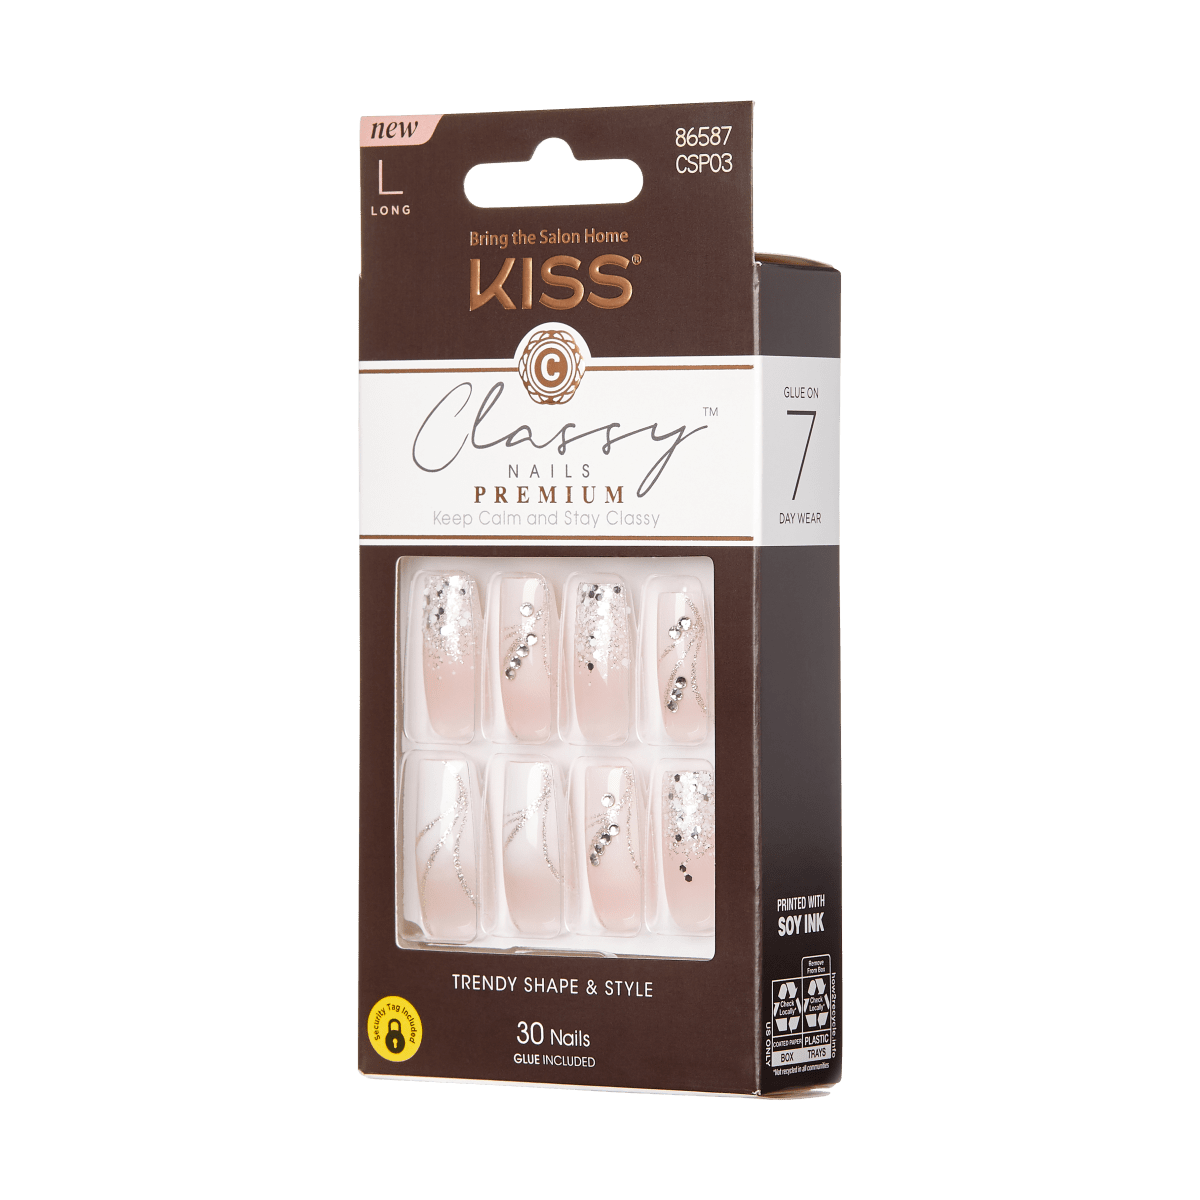 Kiss Classy Nails Premium - Stunning (CSP03)